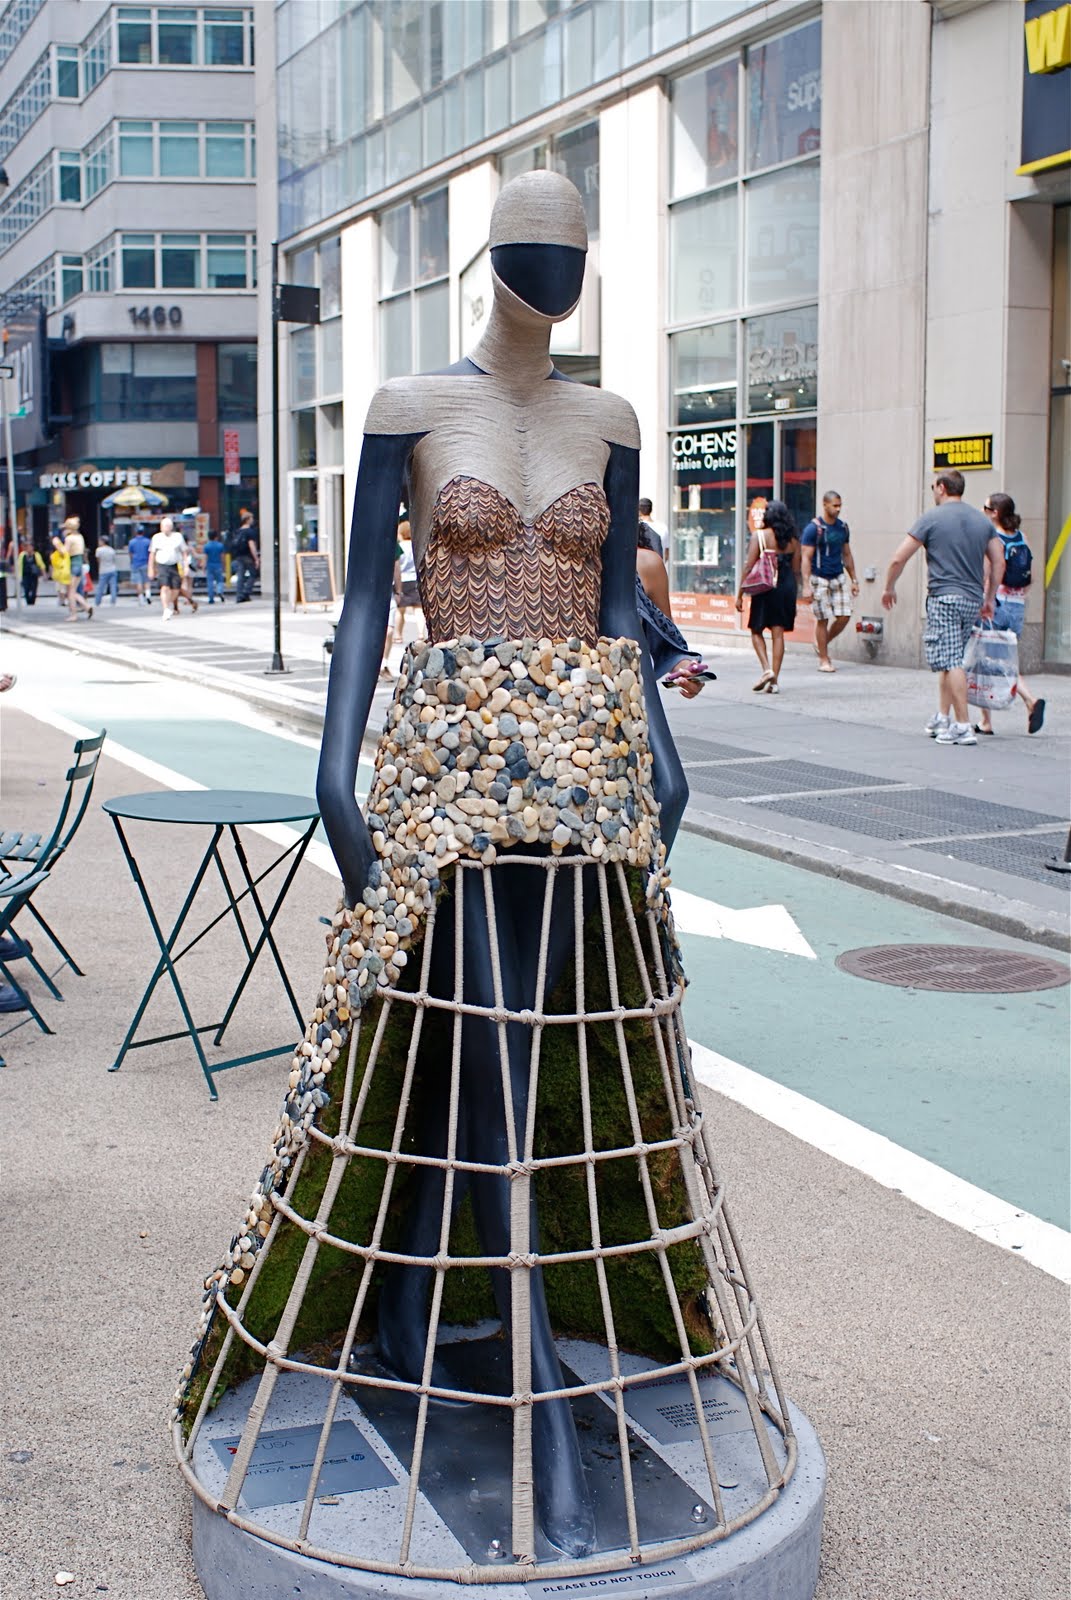 NYC ♥ NYC: Sidewalk Catwalk Presents Mannequin Art and Fashion Exhibition